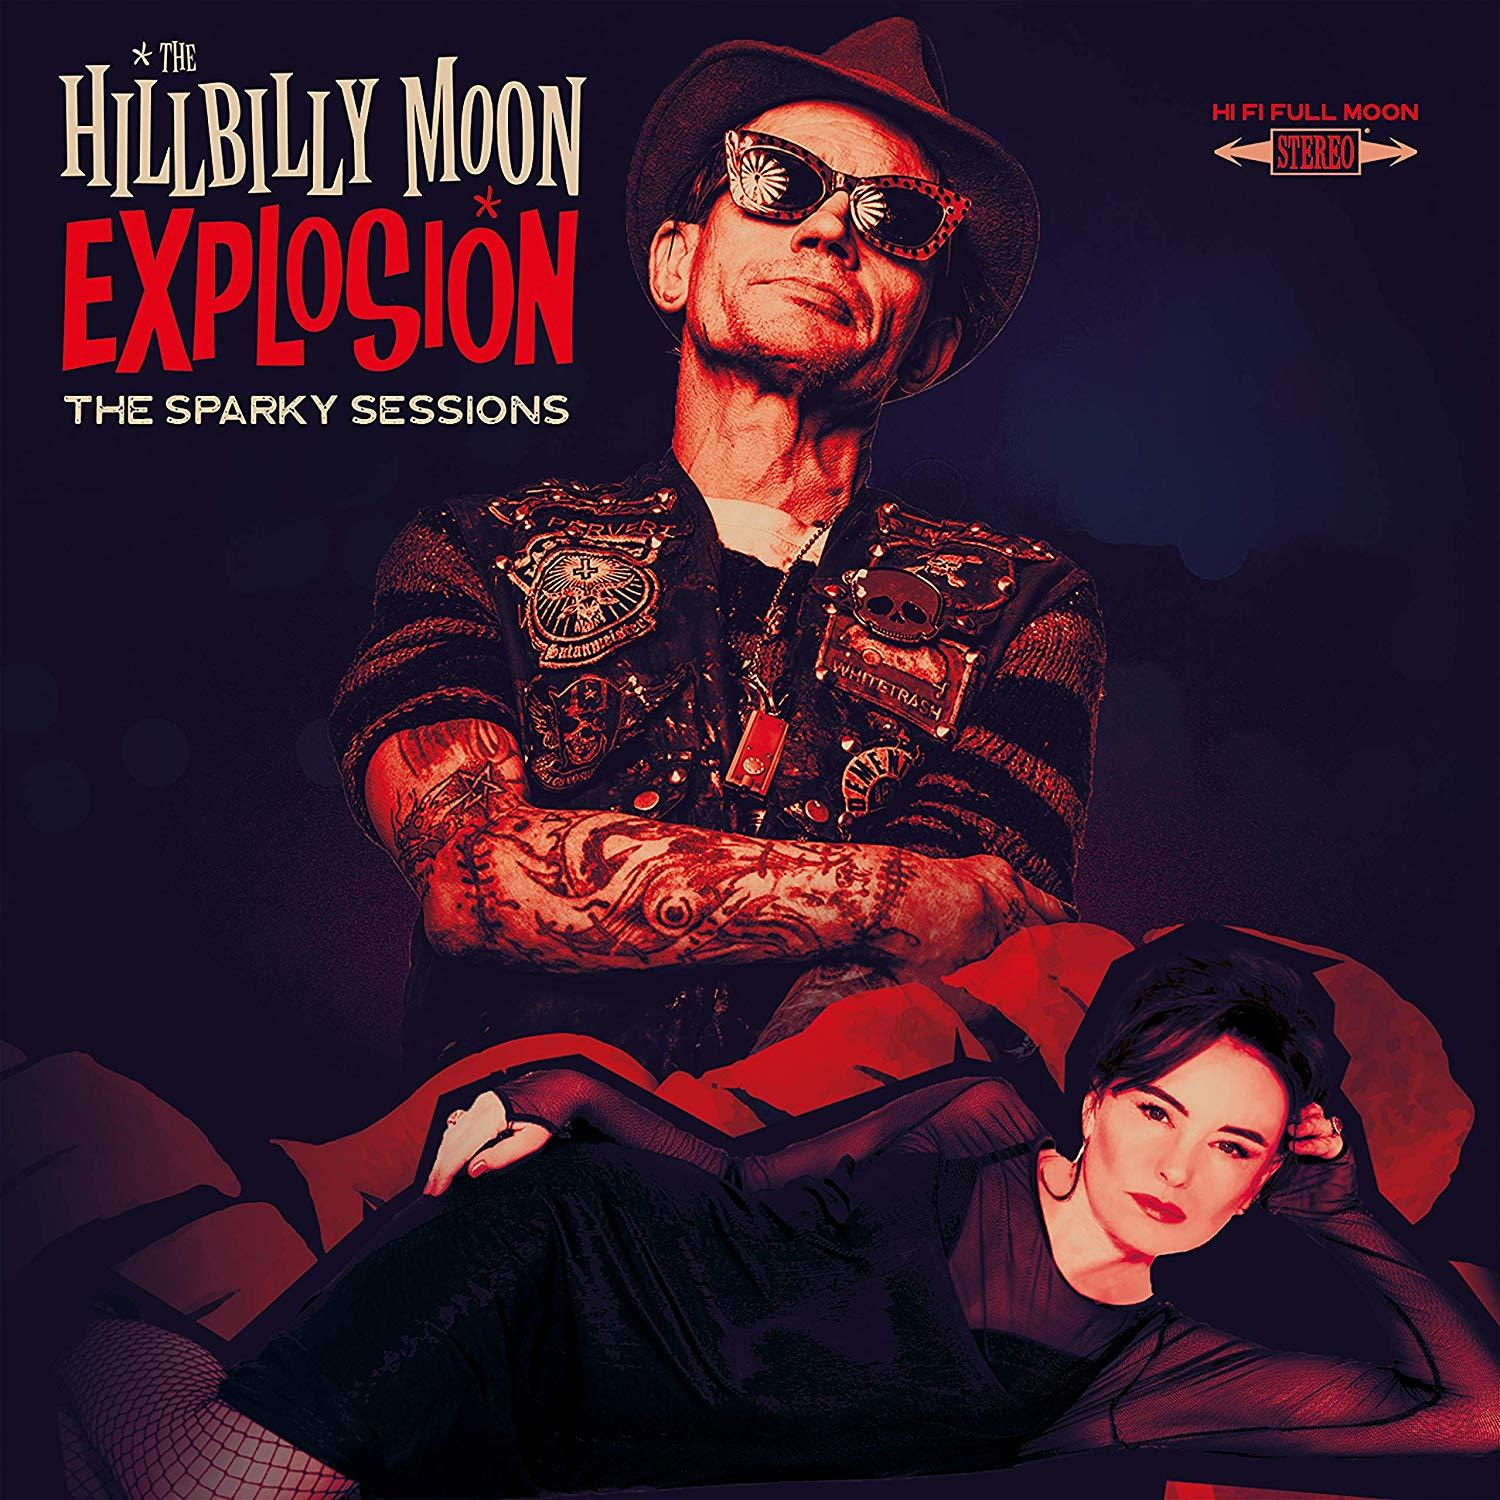 Sparky Moon The (Vinyl) - Sessions - Explosion Hillbilly